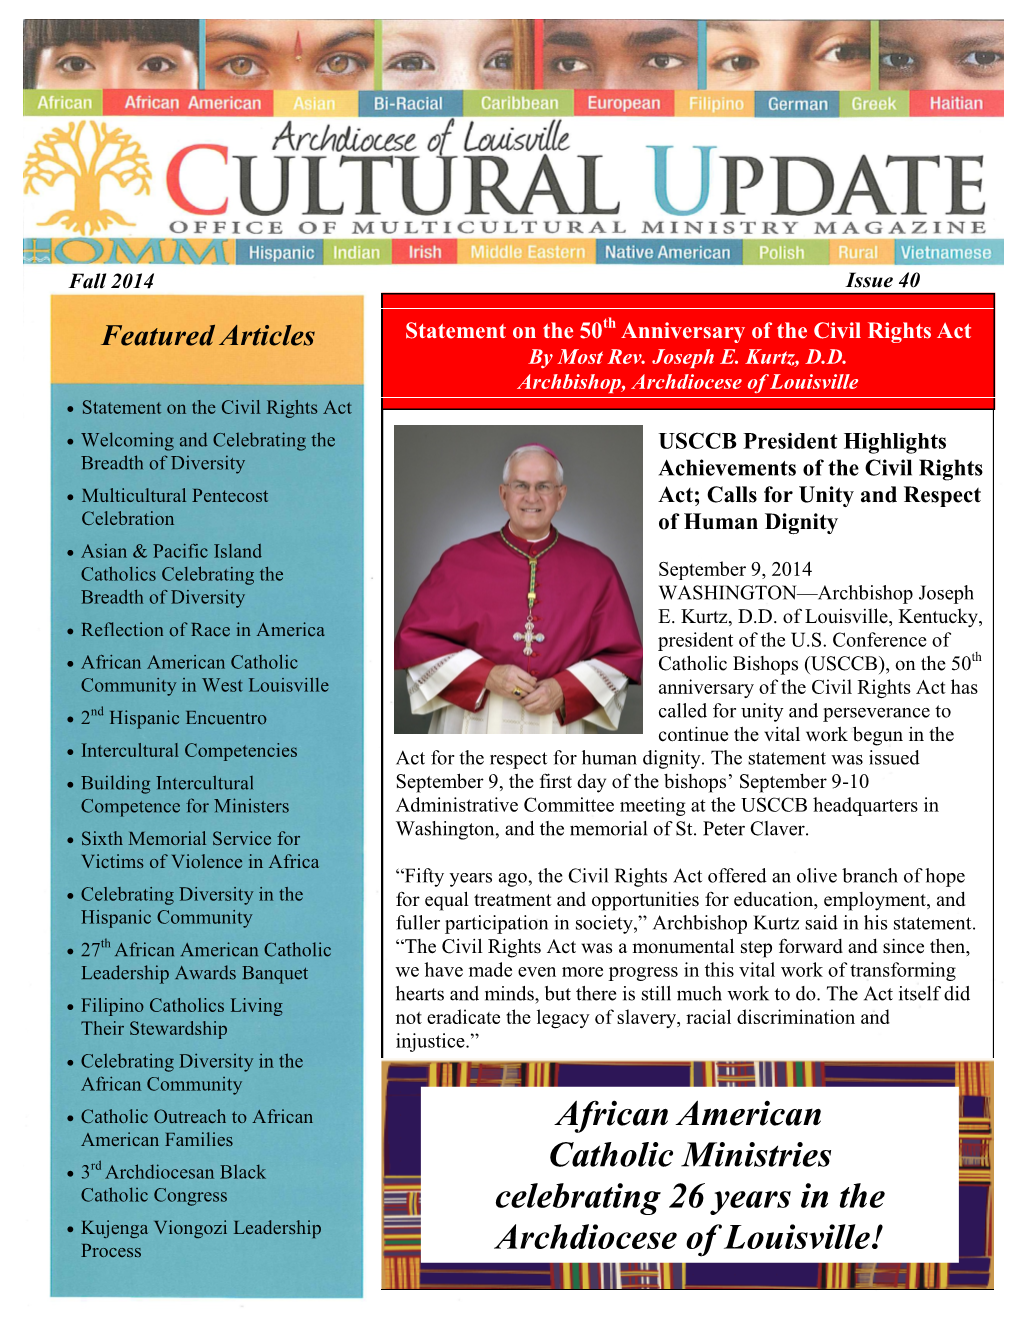 Cultural Update (Fall 2014 Issue